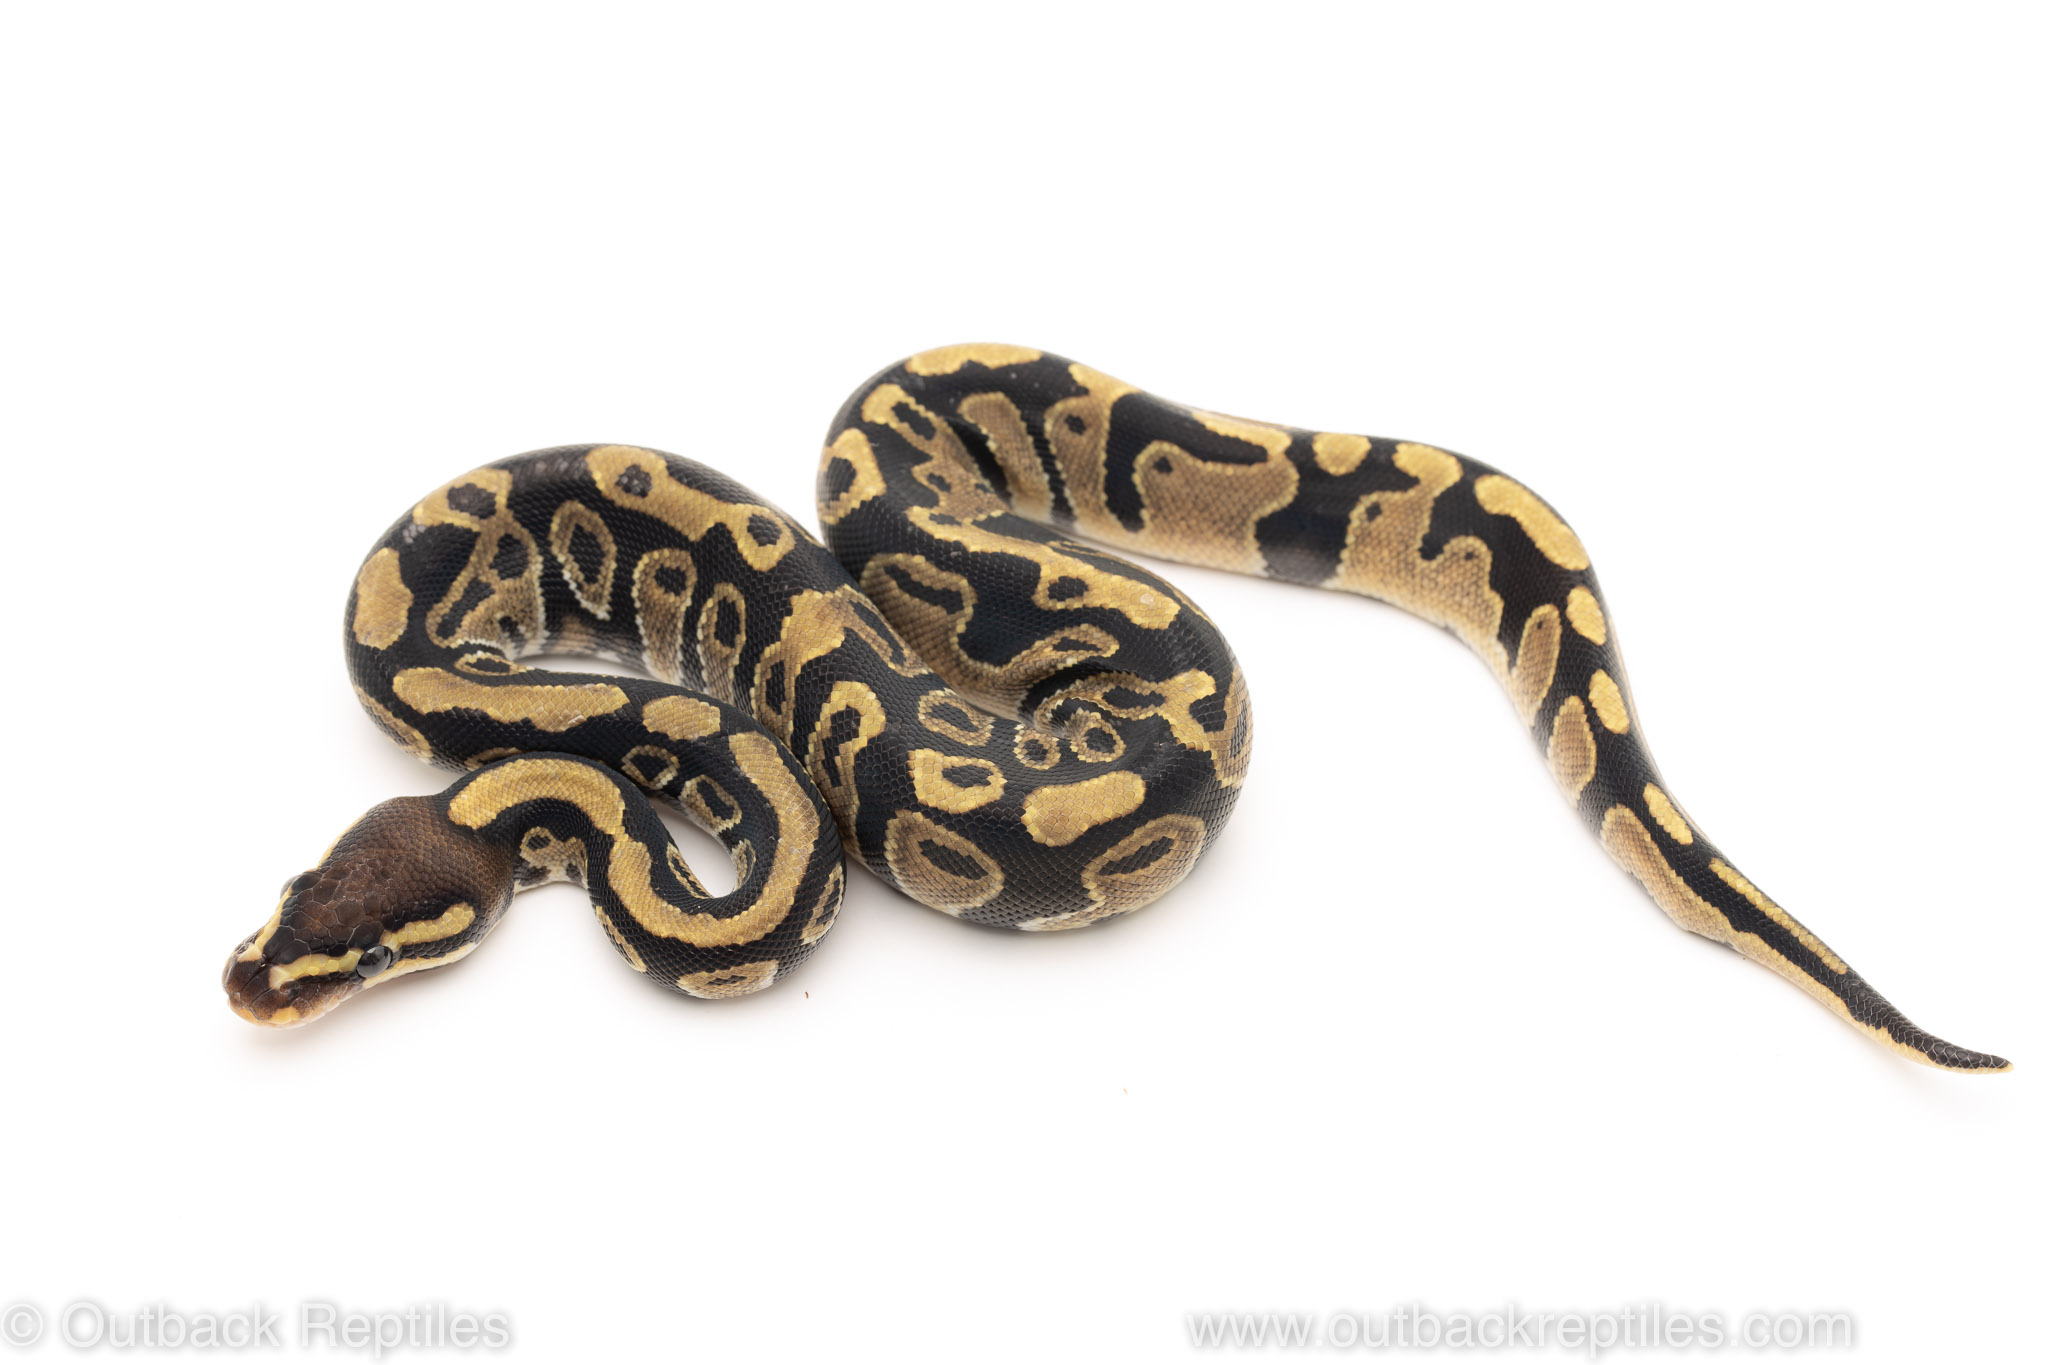 African Import Dinker Ball Python for sale